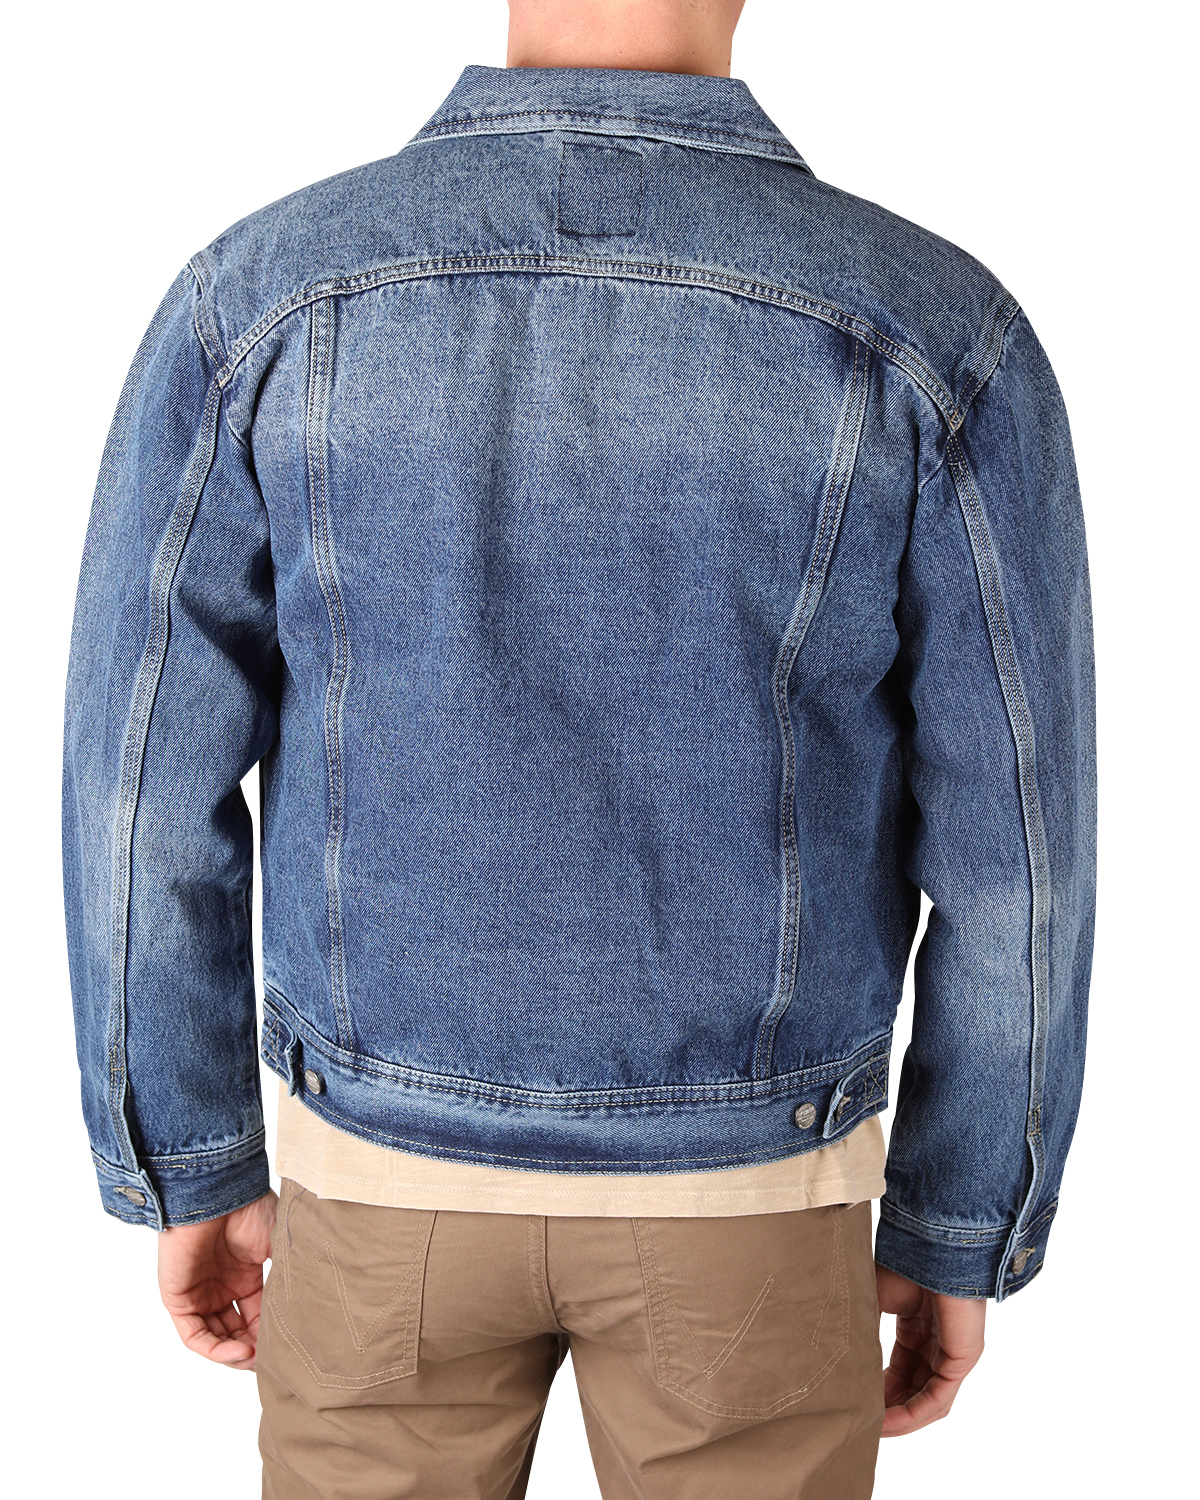 Pioneer 4010-2451-578 Herren Jeans Jacke stonewashed